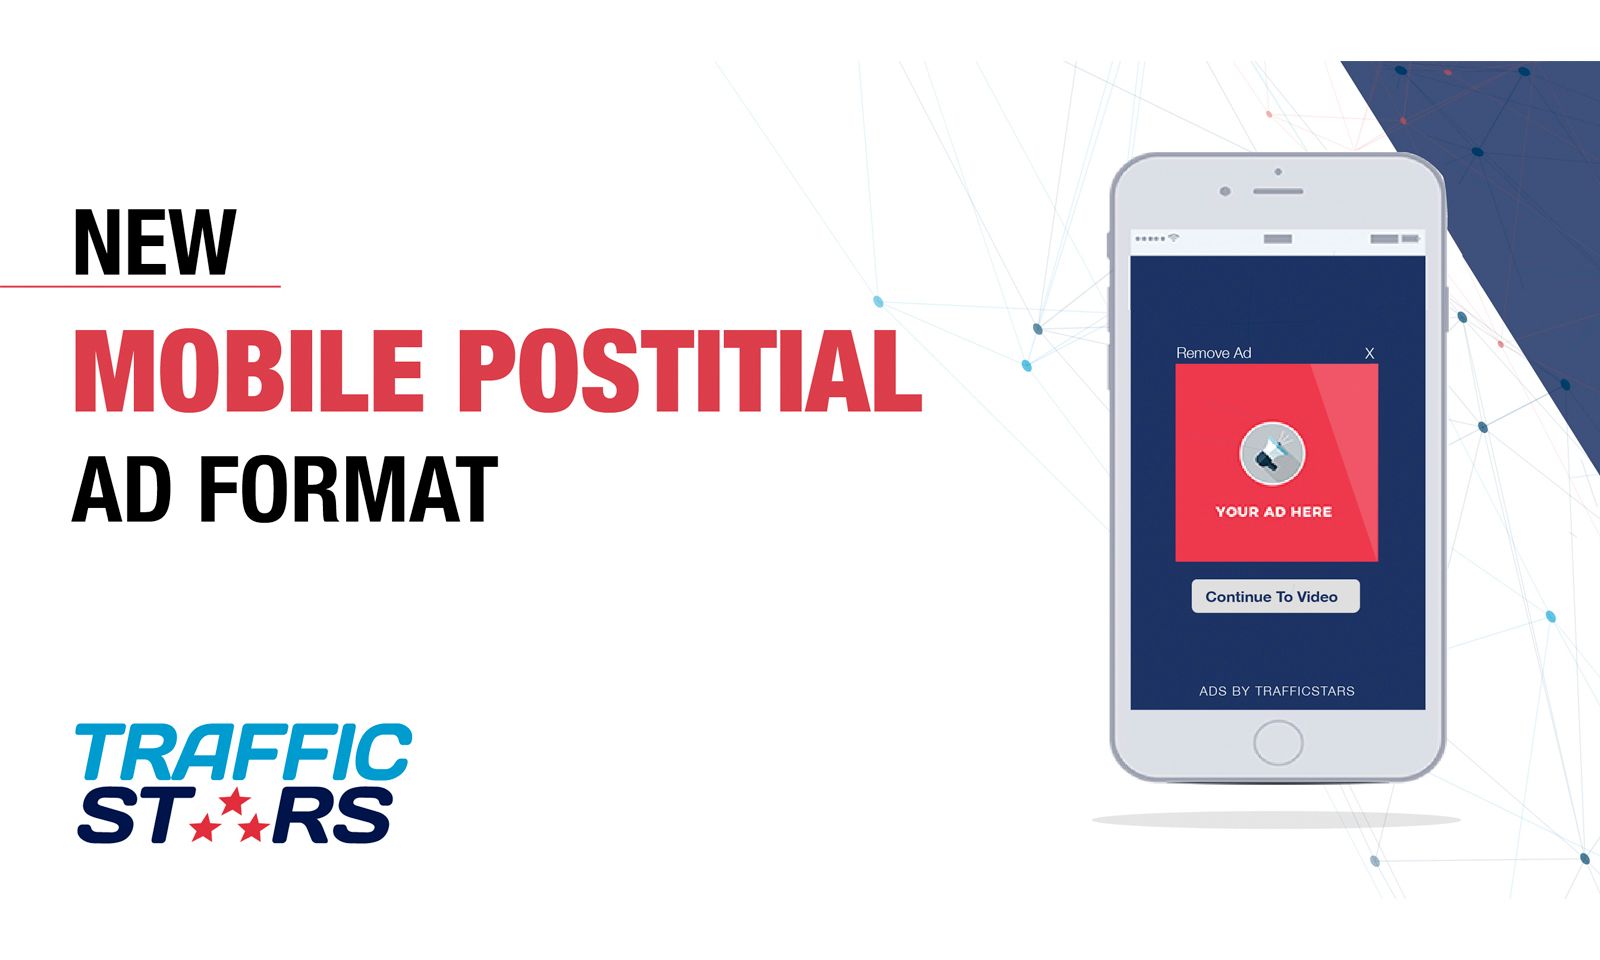 TrafficStars Debuts Mobile Postitial Format